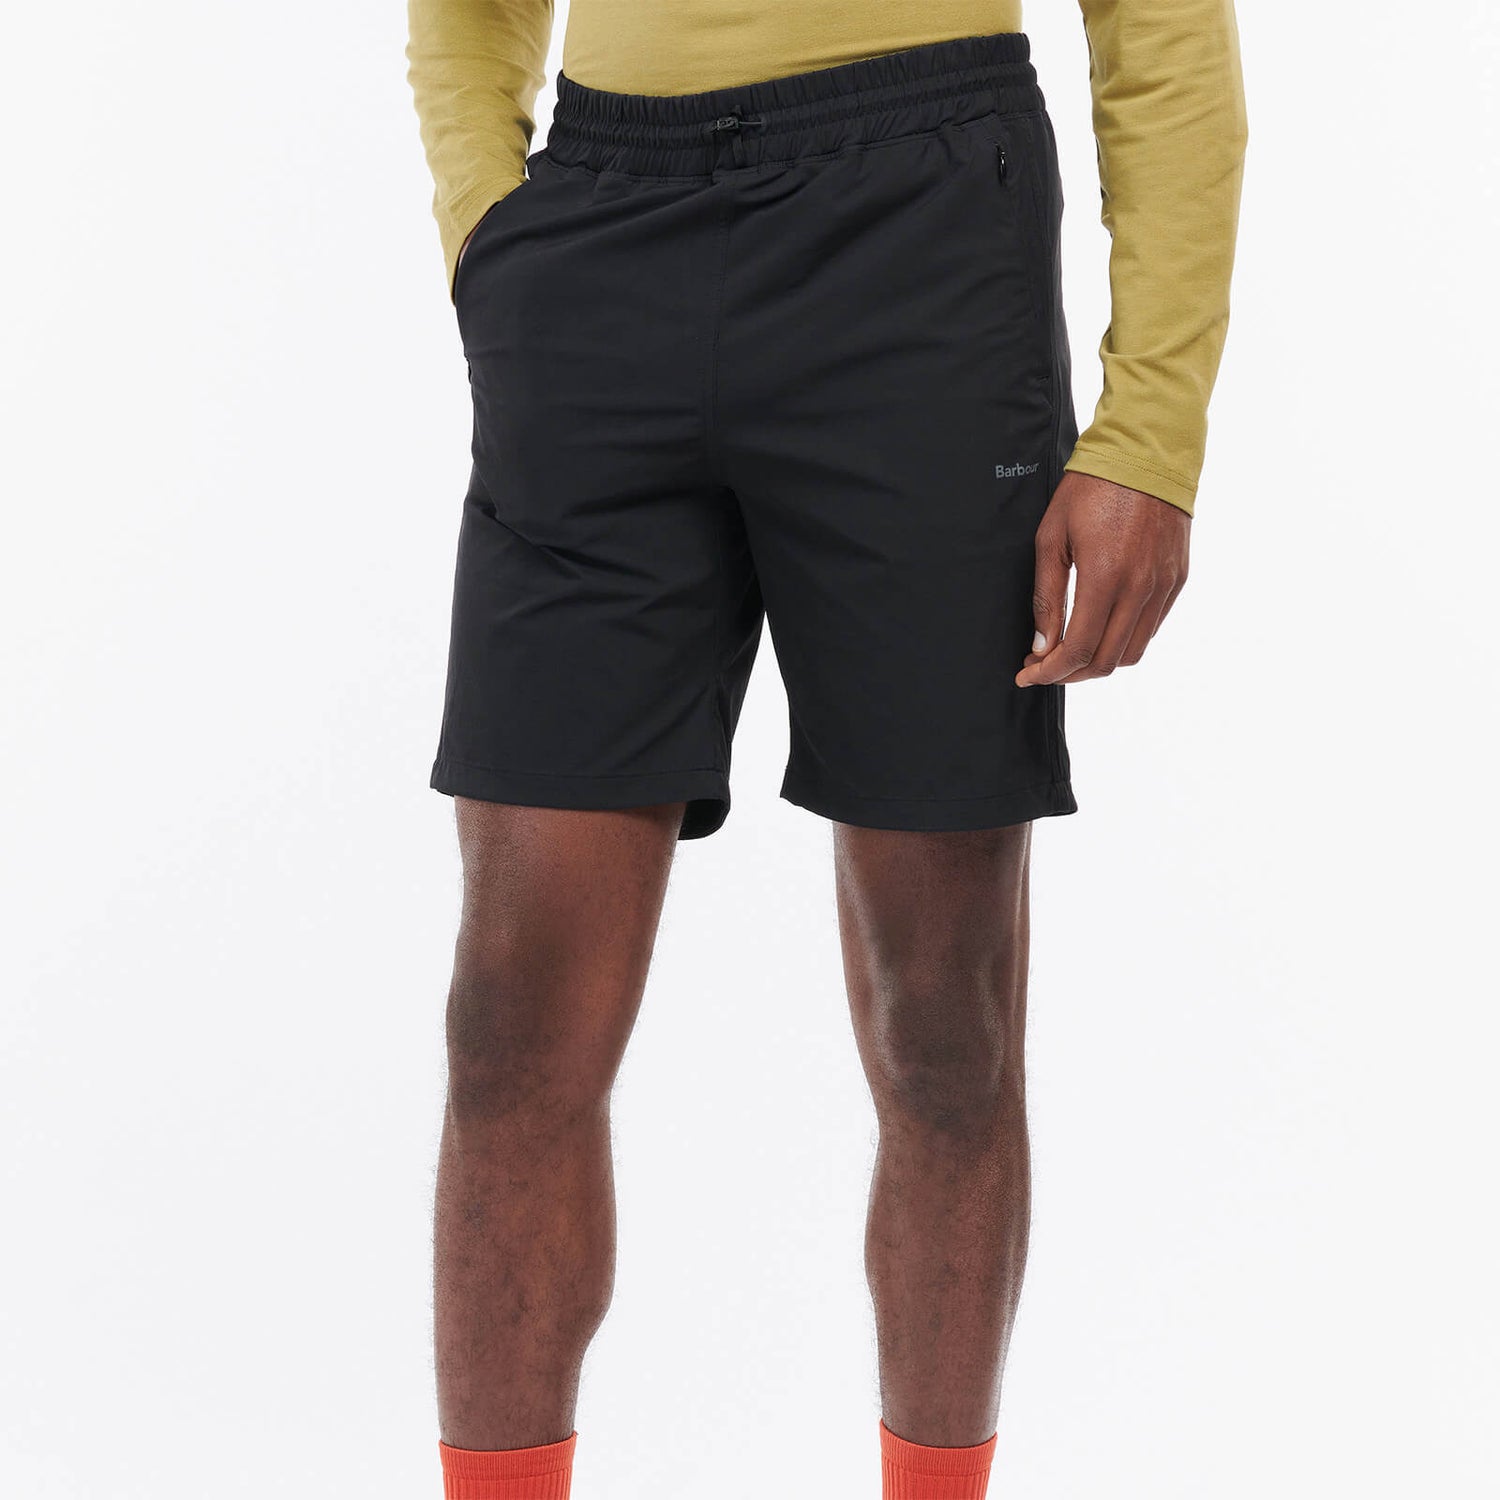 Barbour 55 Degrees North Men's Lowland Shorts - Black - S